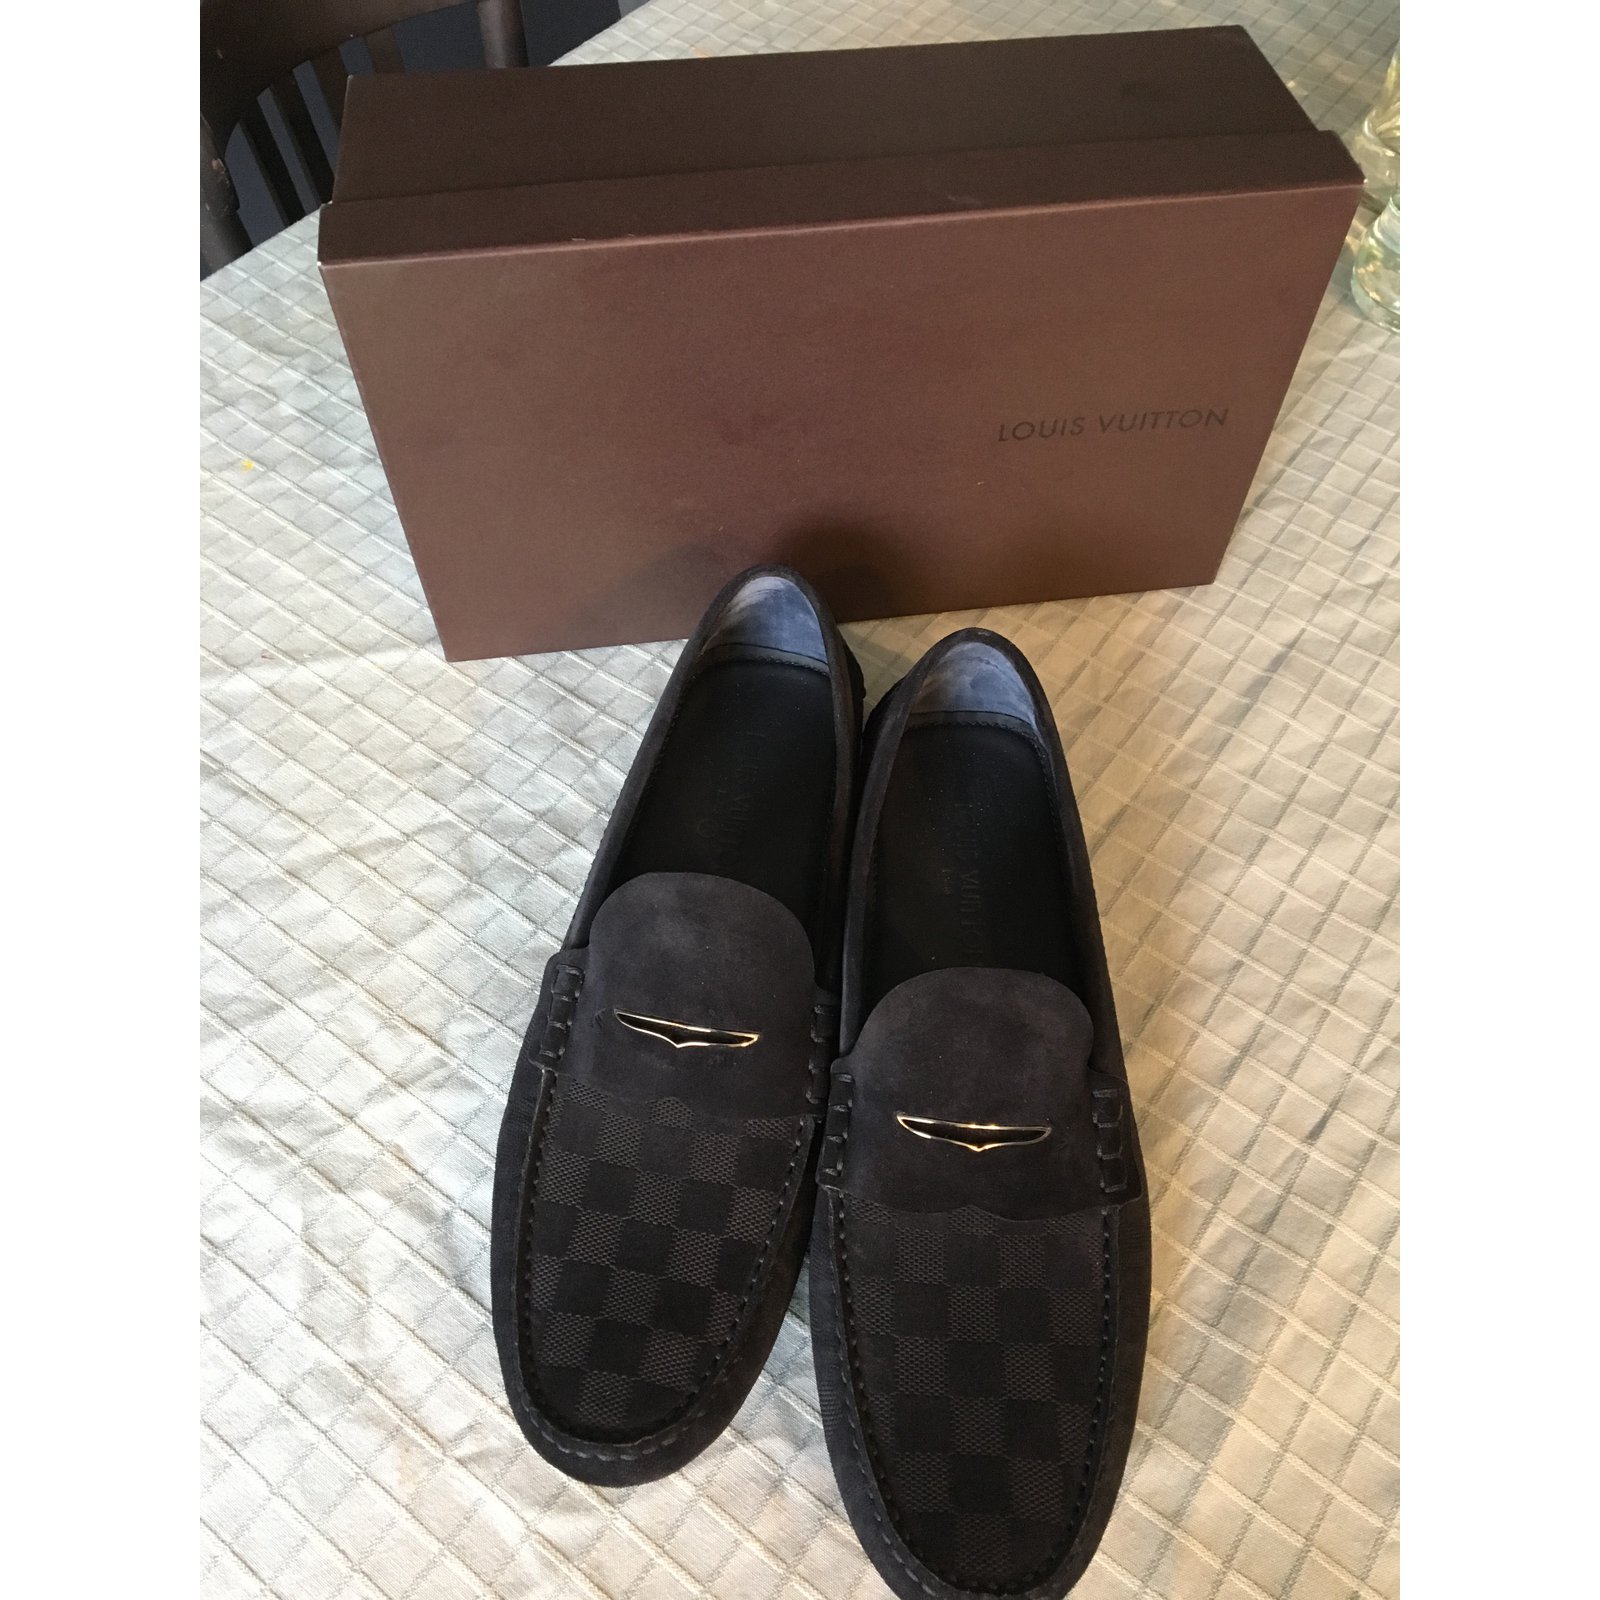 Louis Vuitton Mens Loafers & Slip-Ons, Black, UK8